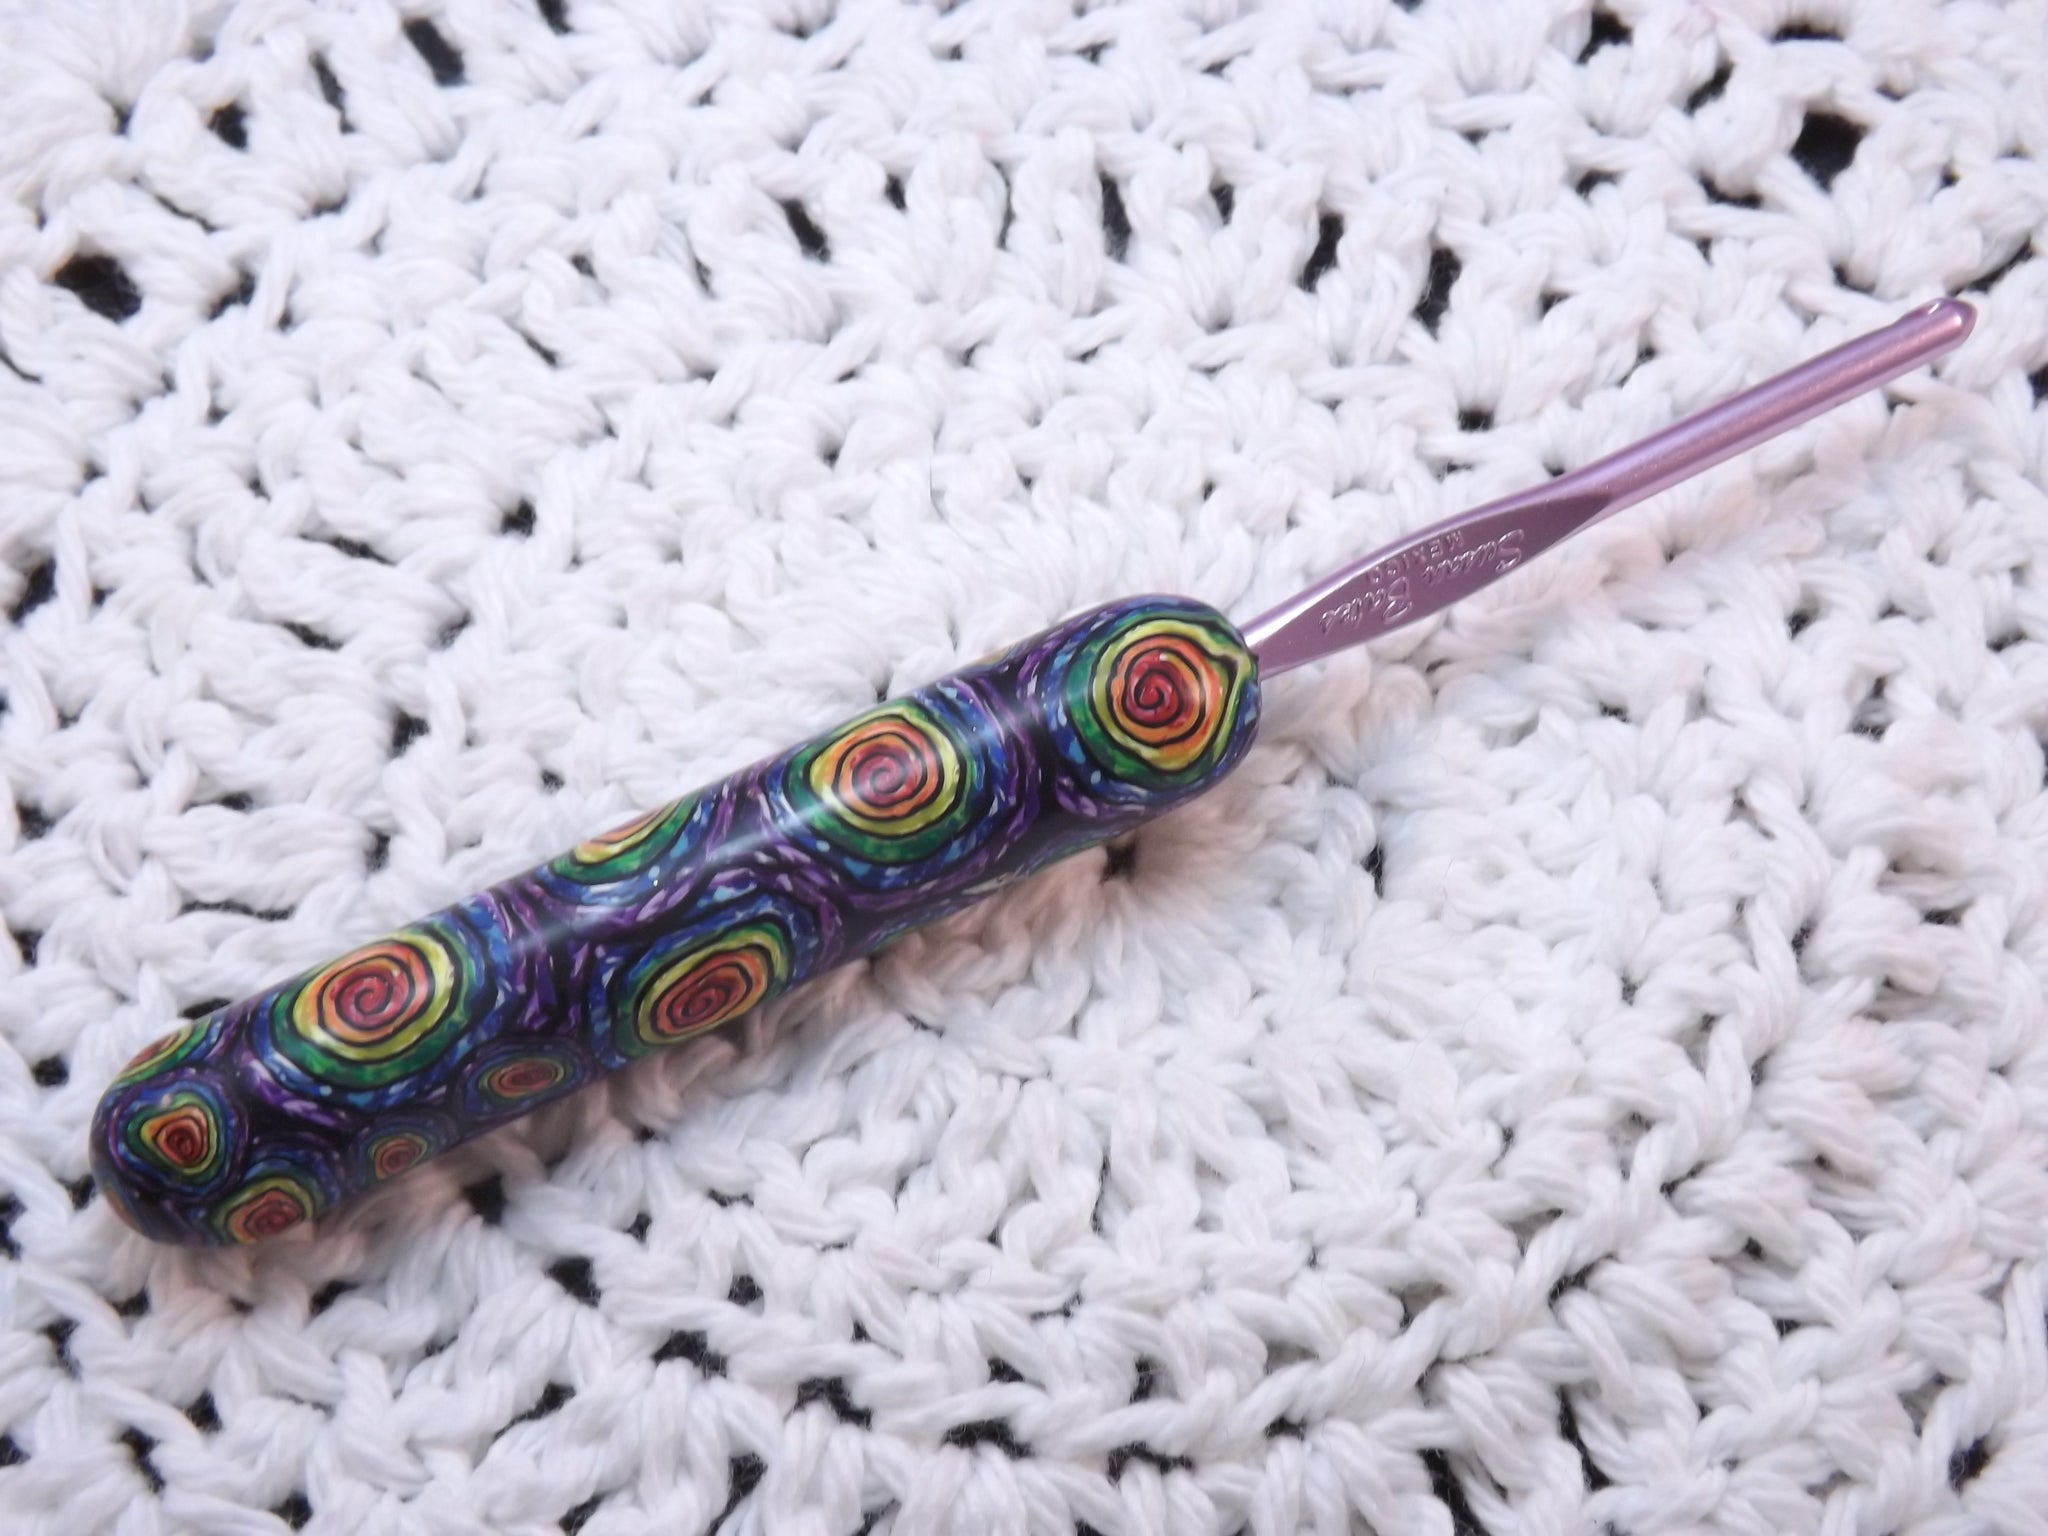 LOOEN 9pcs Solft Warm Crochet Hook Kit Polymer Clay Rainbow Crochet Hoook  2.0-6.0mm Aluminum Knitting Hook for Crochet Yarn Craft (Rainbow)